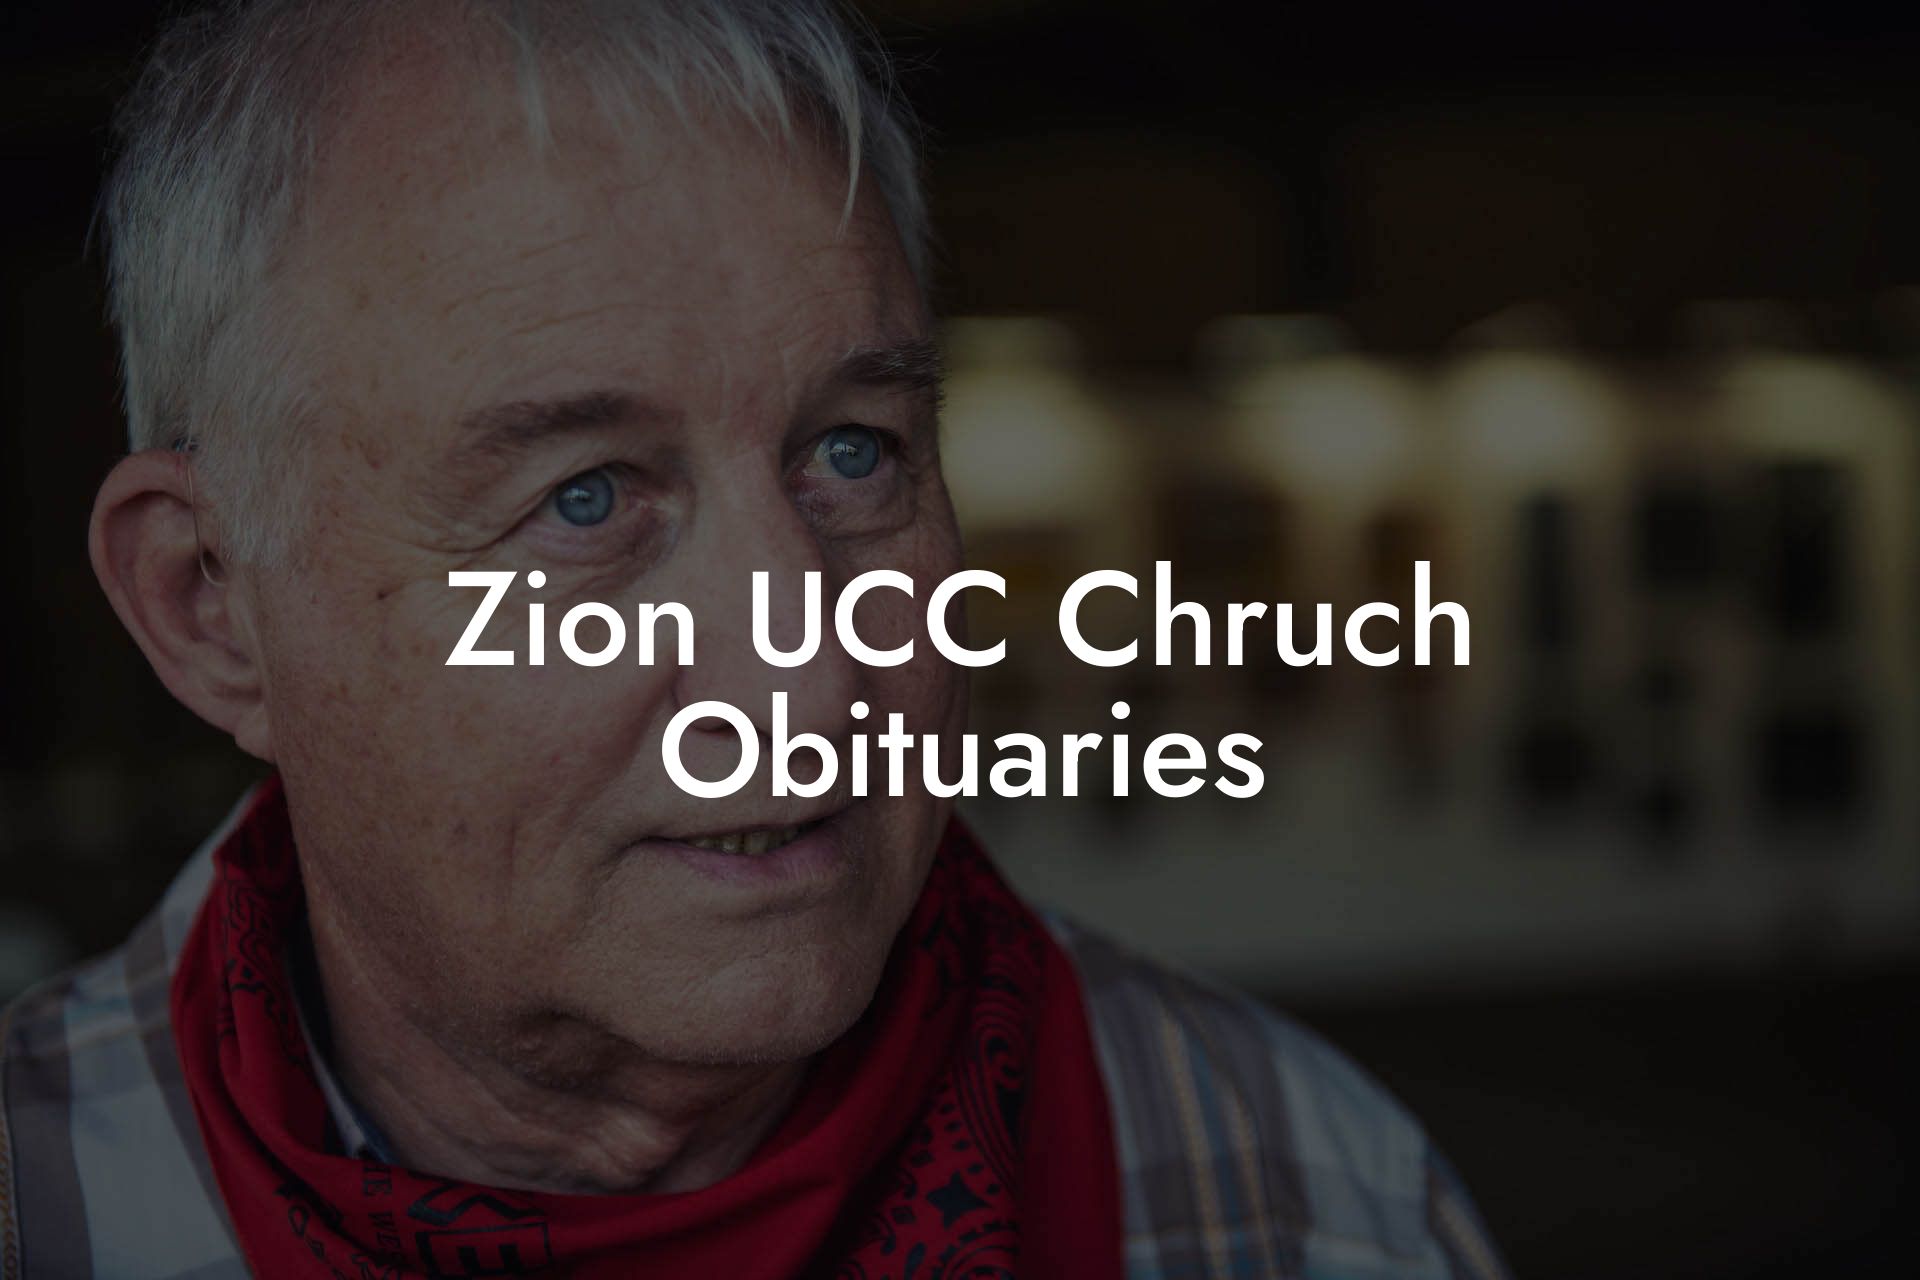 Zion UCC Chruch Obituaries